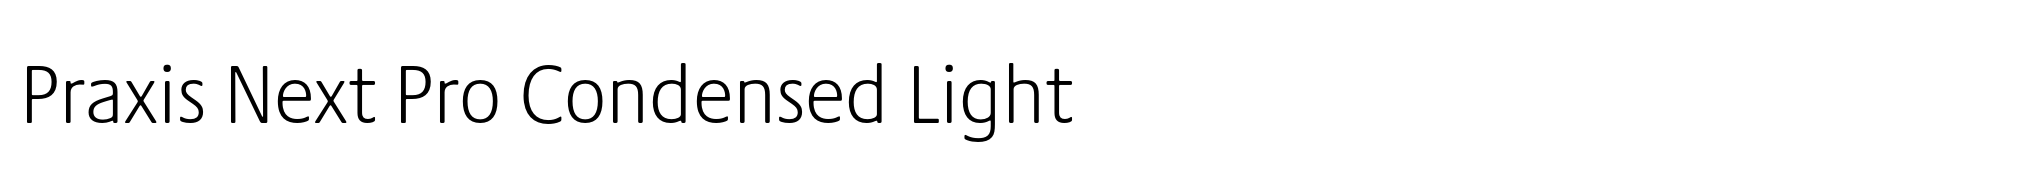 Praxis Next Pro Condensed Light image